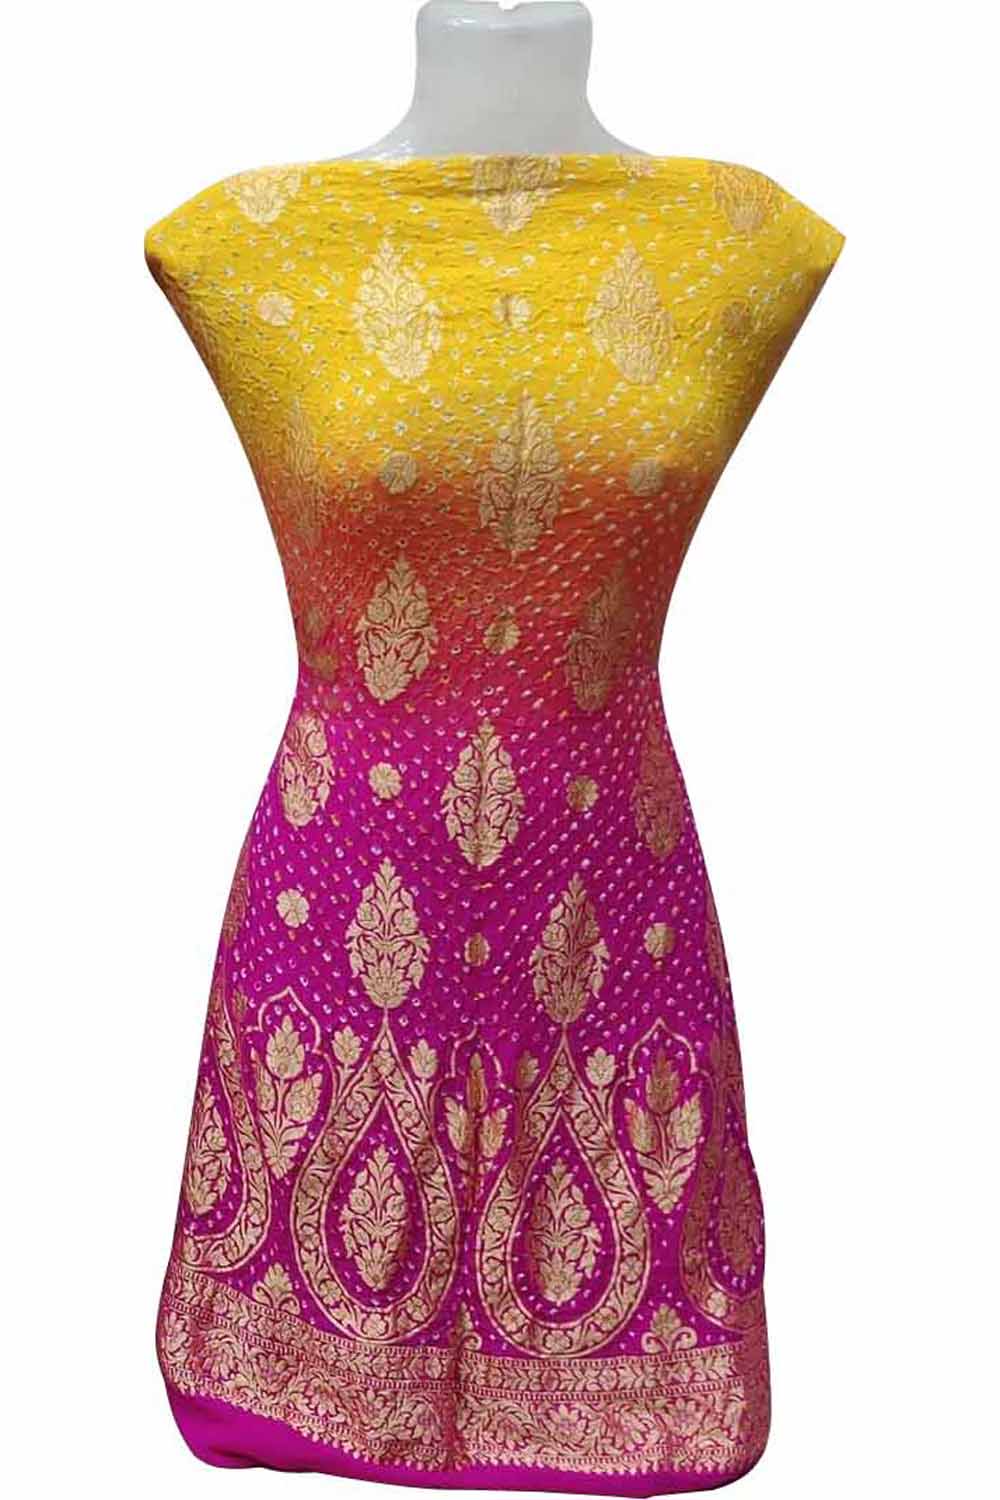 Multicolor Banarasi Bandhani Handloom Pure Georgette Three Piece Unstitched Suit Set - Luxurion World